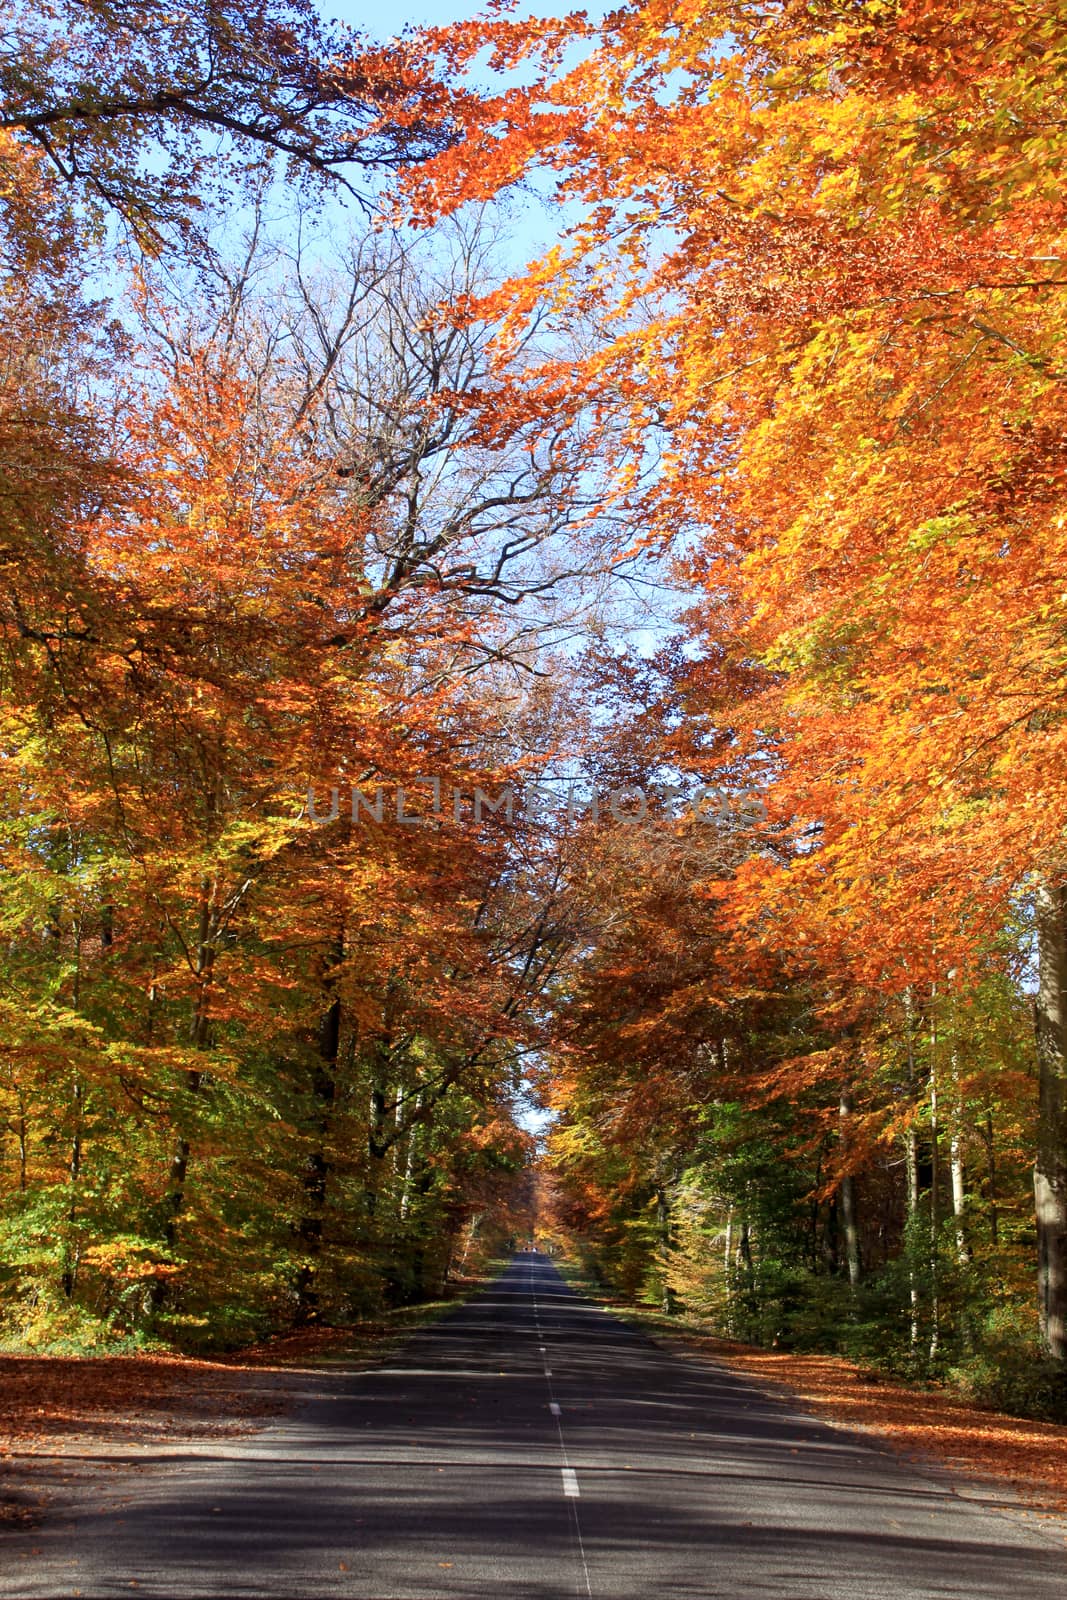 An avenue of beech trees fall foliage along a road on a blue sky background